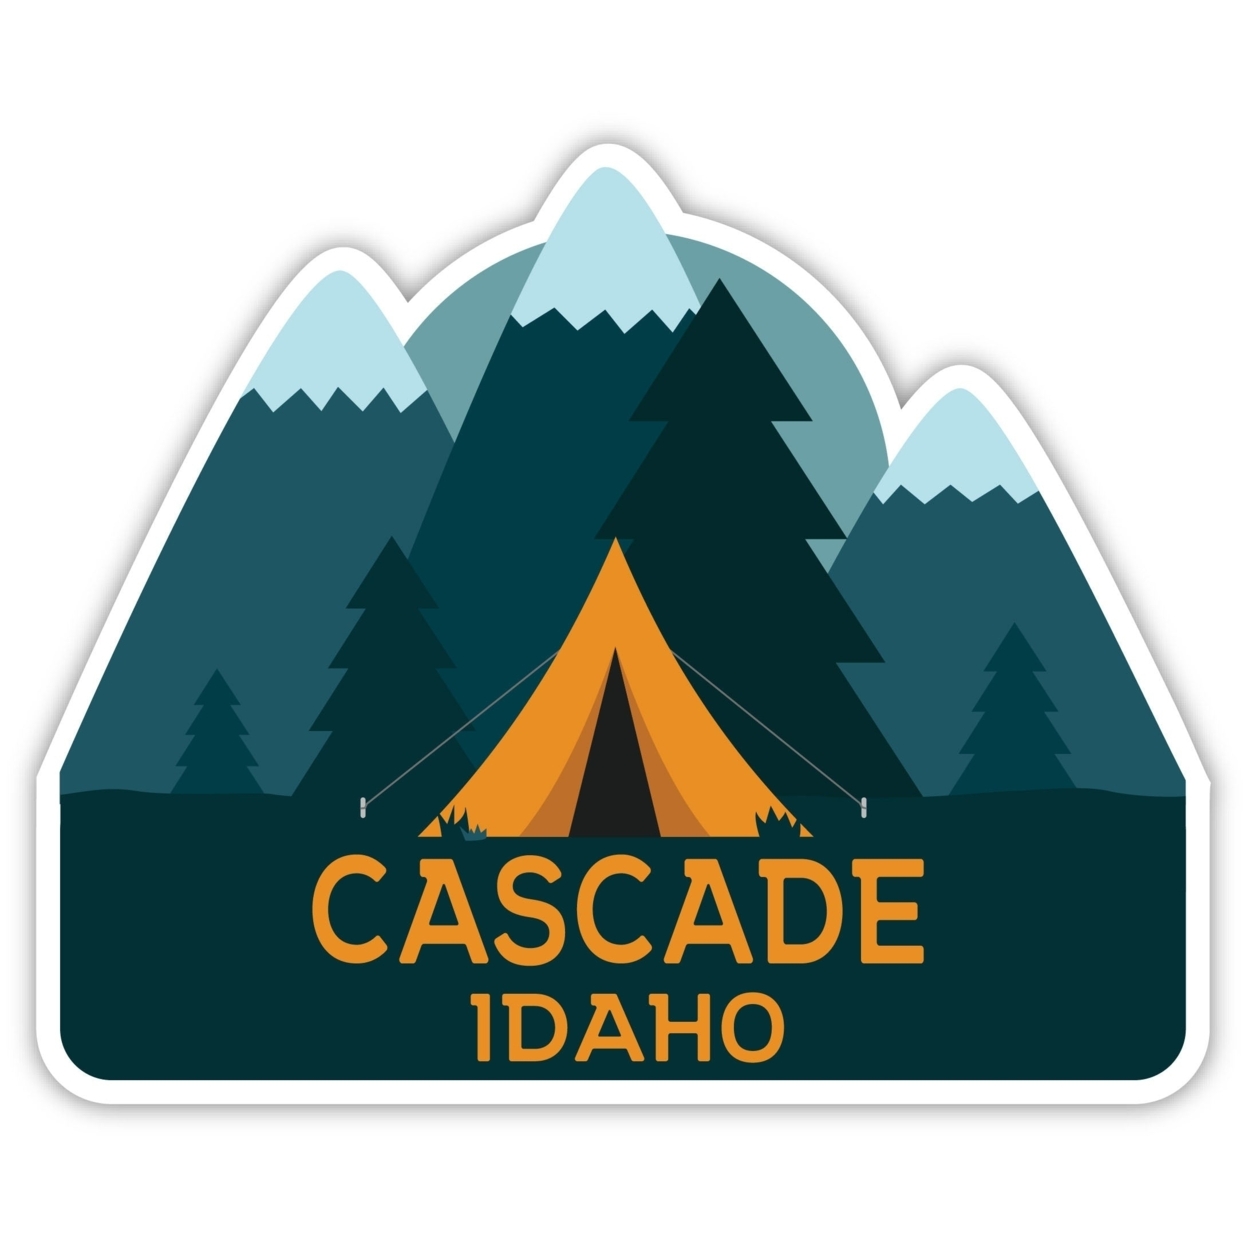 Cascade Idaho Souvenir Decorative Stickers (Choose Theme And Size) - Single Unit, 12-Inch, Adventures Awaits